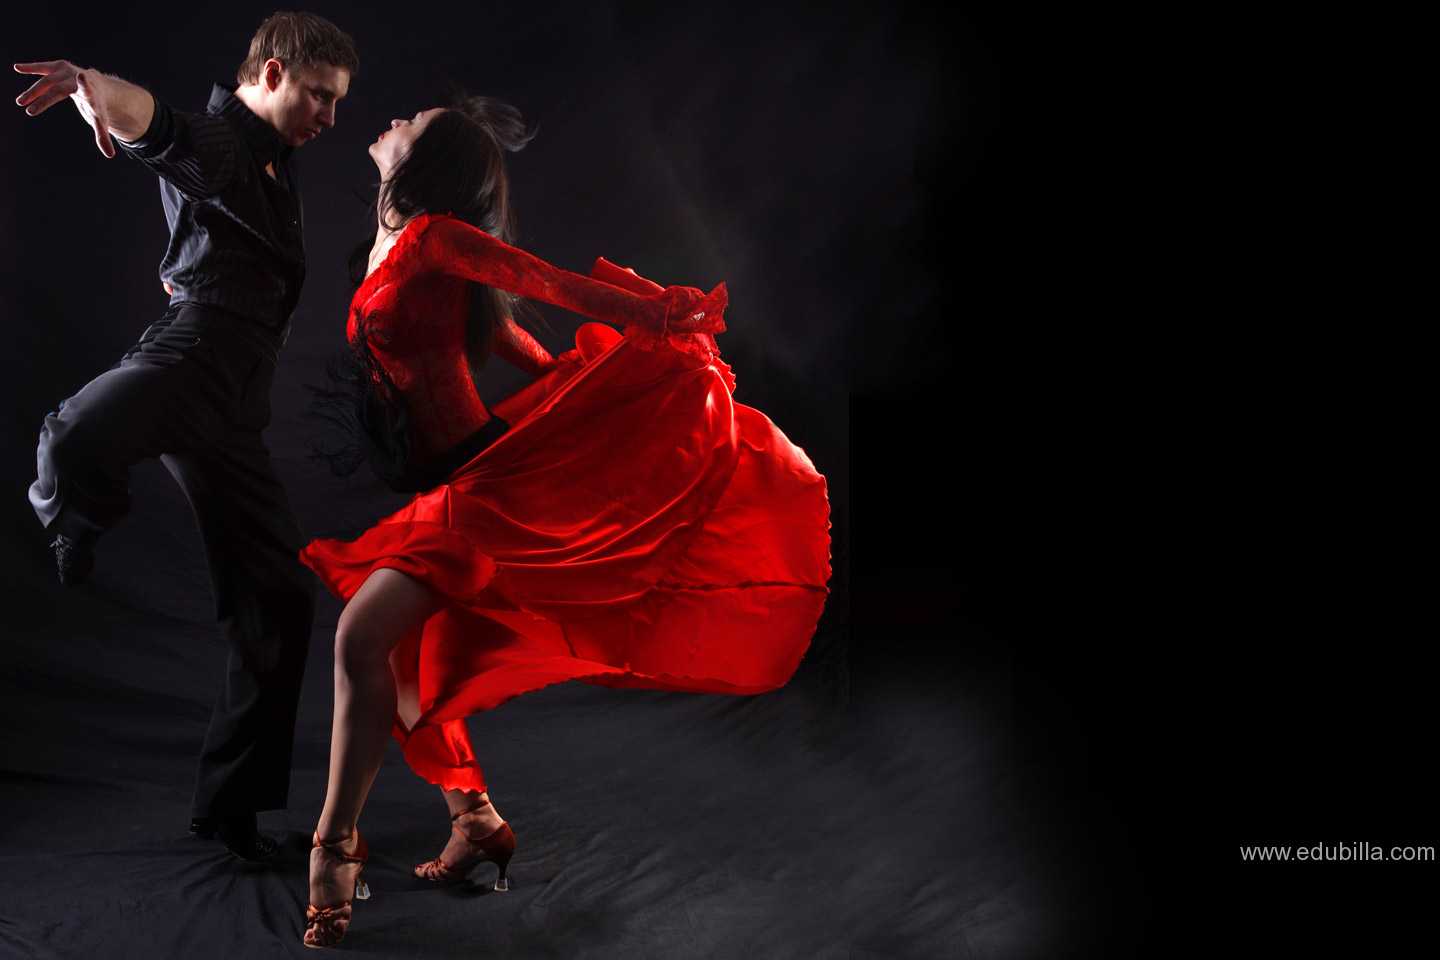 Latin Dance games, Latin Dance rules, Latin Dance awards, Latin Dance